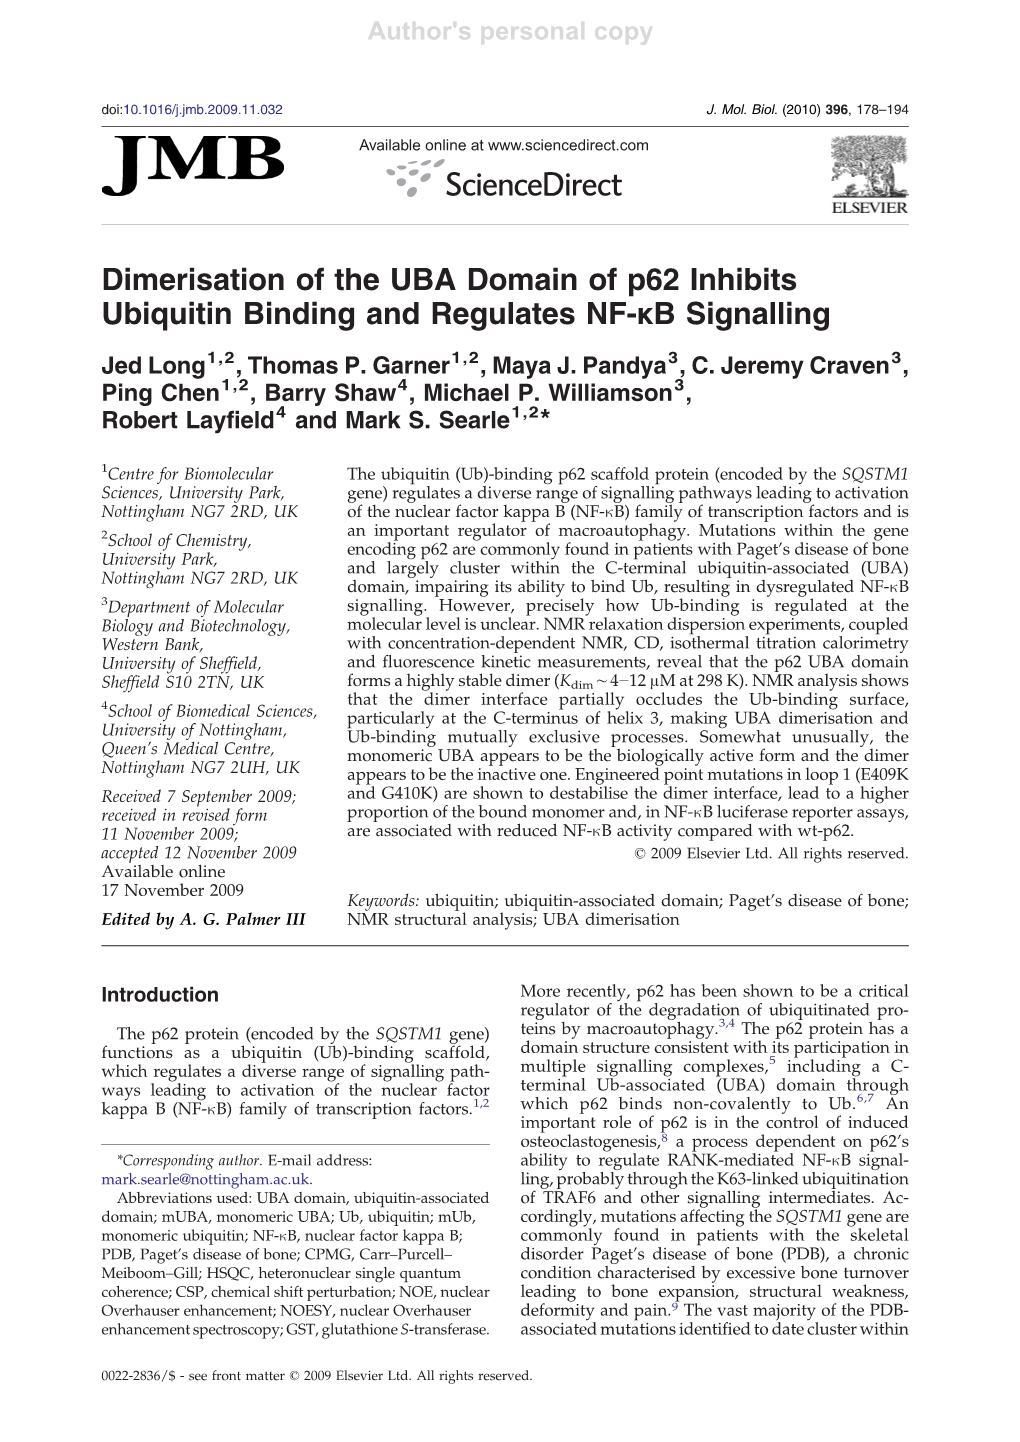 Dimerisation of the UBA Domain of P62 Inhibits Ubiquitin Binding and Regulates NF-Κb Signalling